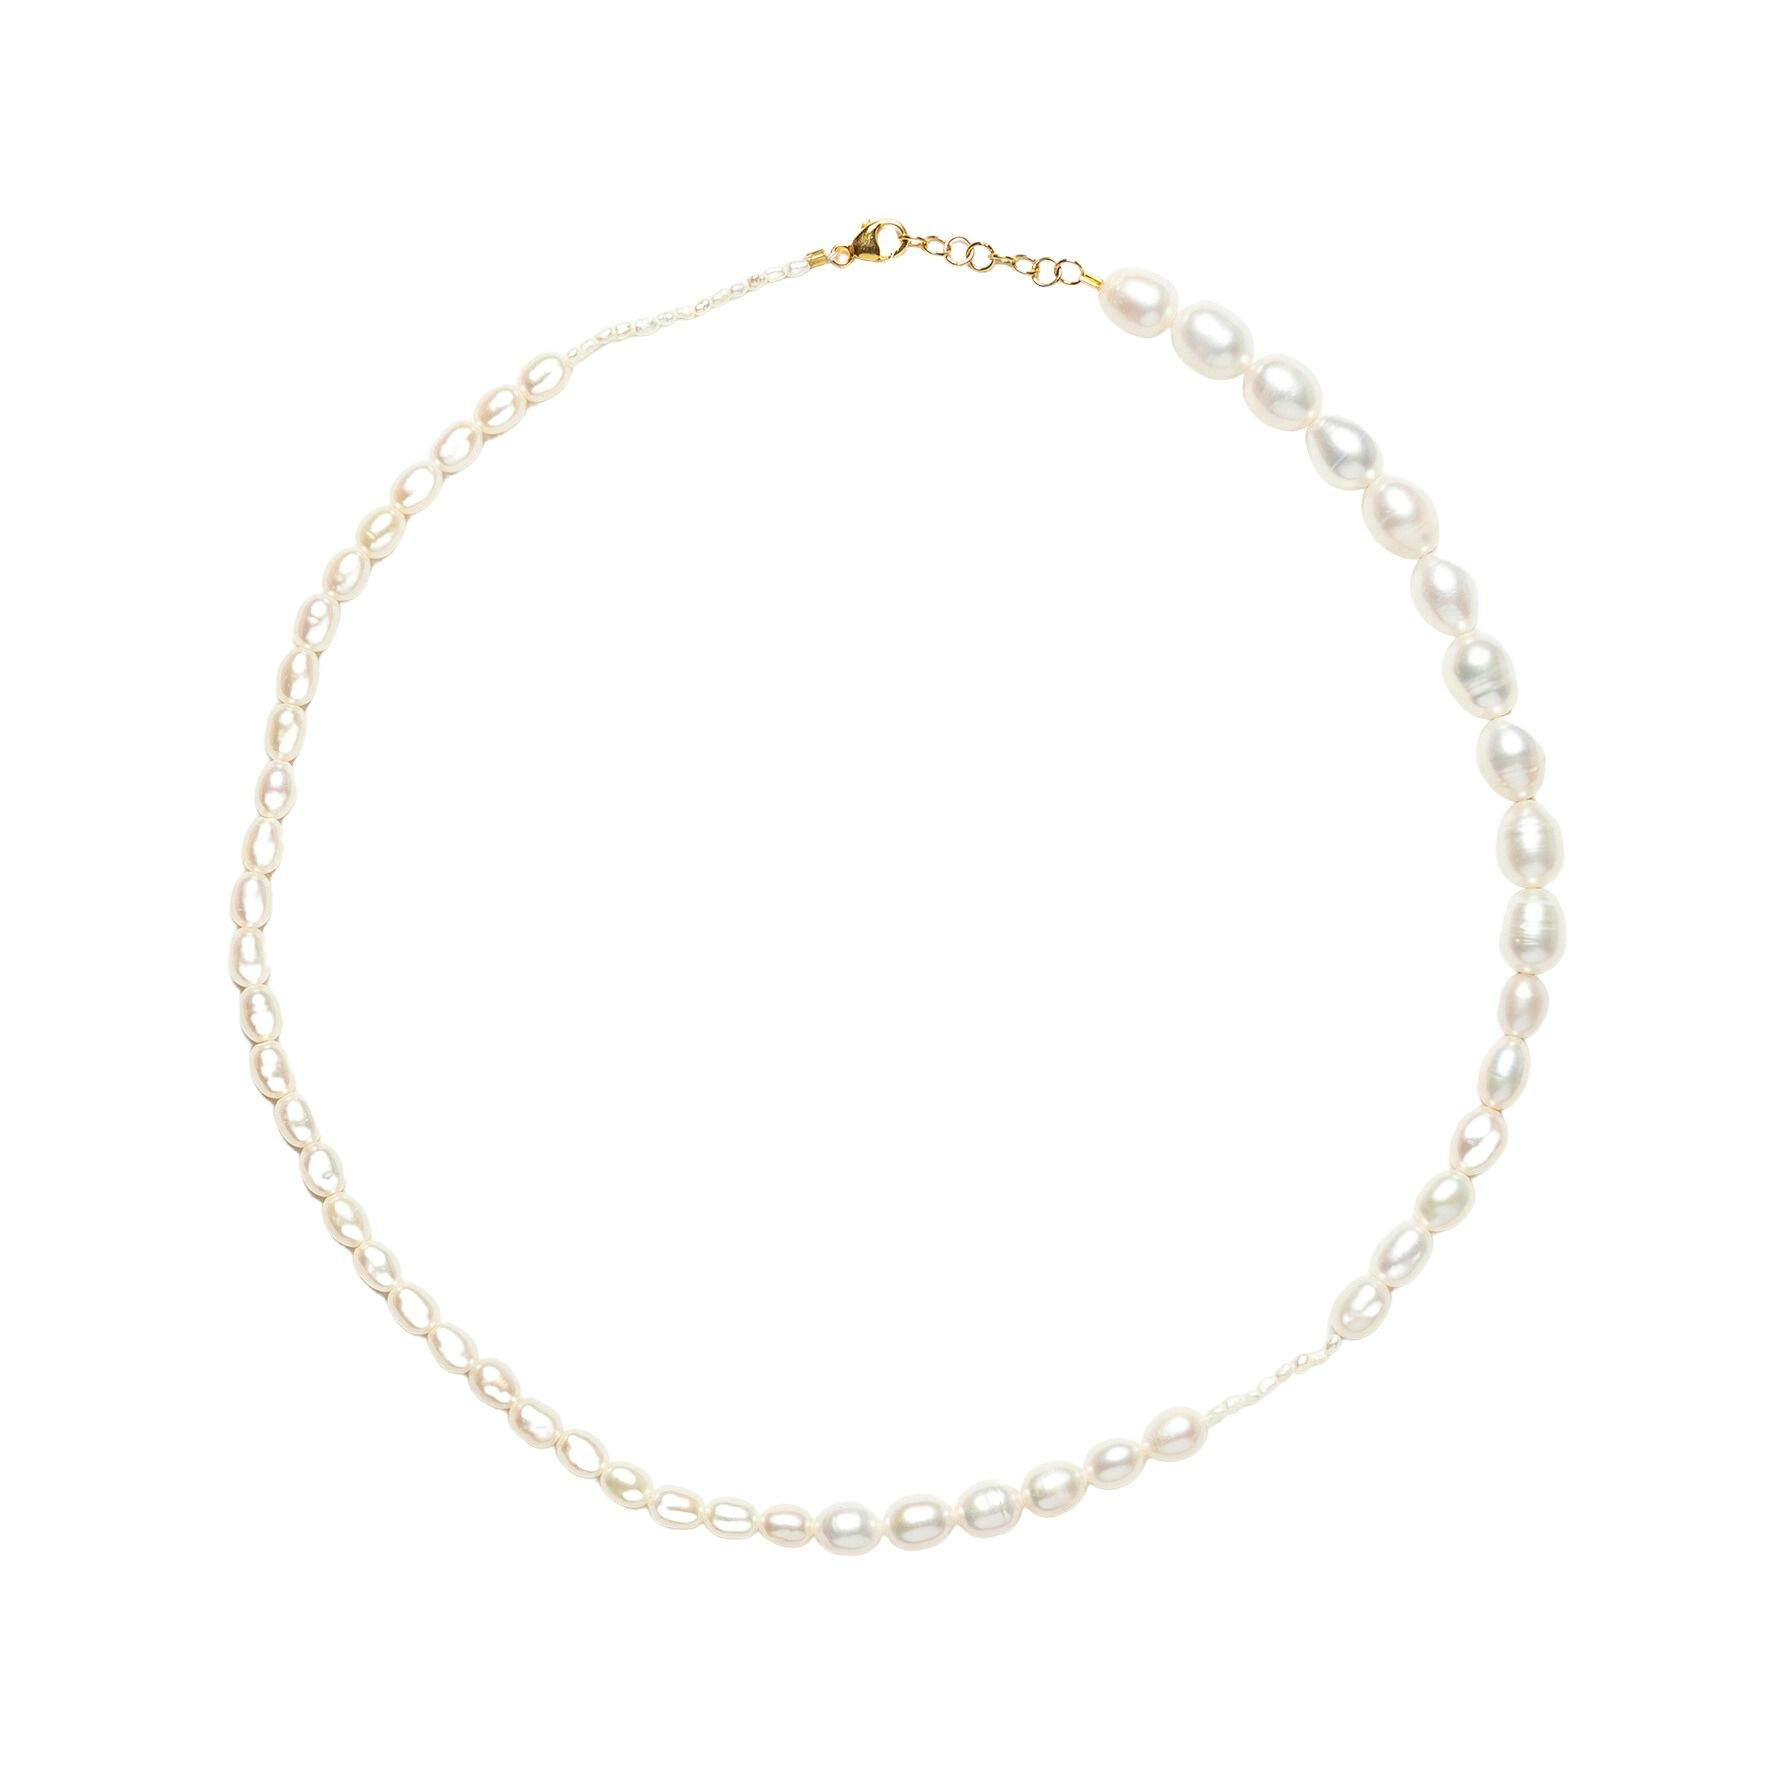 Cloud Necklace von Sorelle Jewellery in Vergoldet-Silber Sterling 925